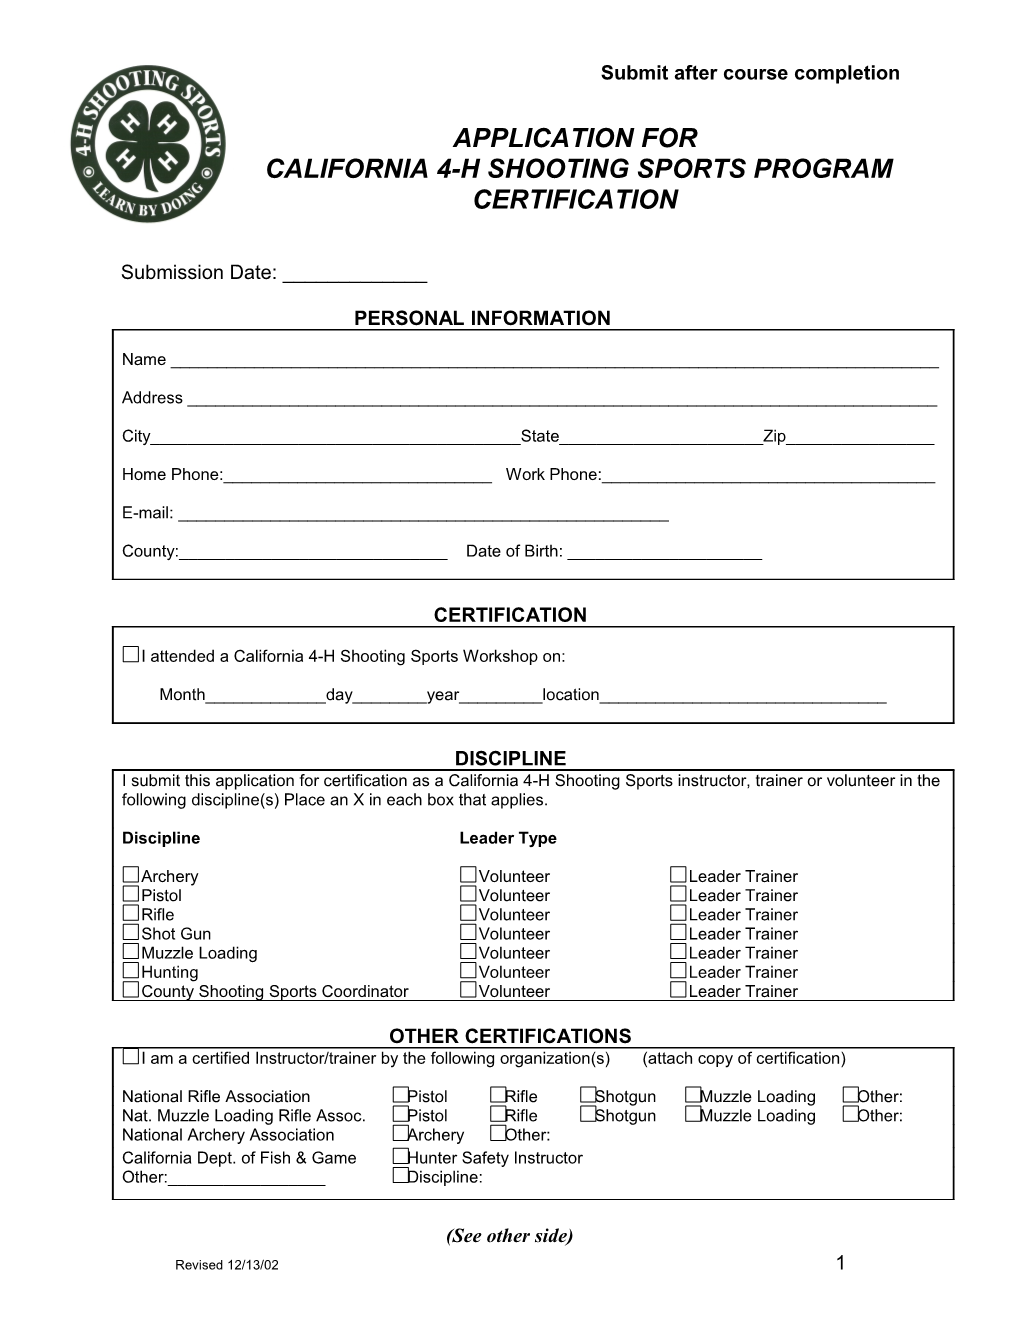 Application for California 4-H Shooting Sports Program Certification